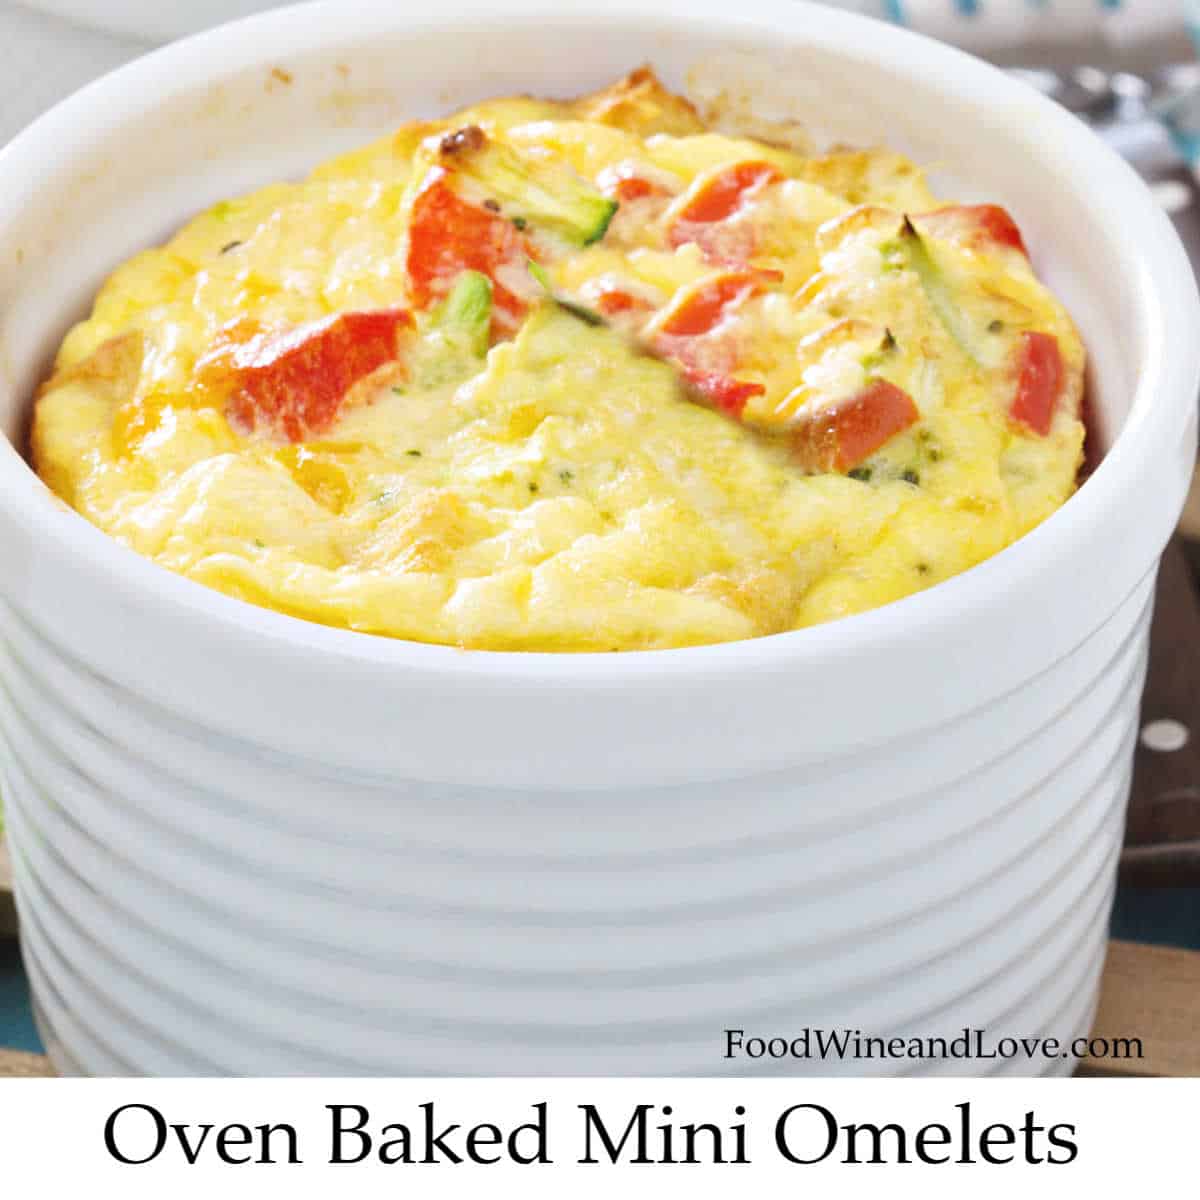 Mediterranean Diet Mini Omelets